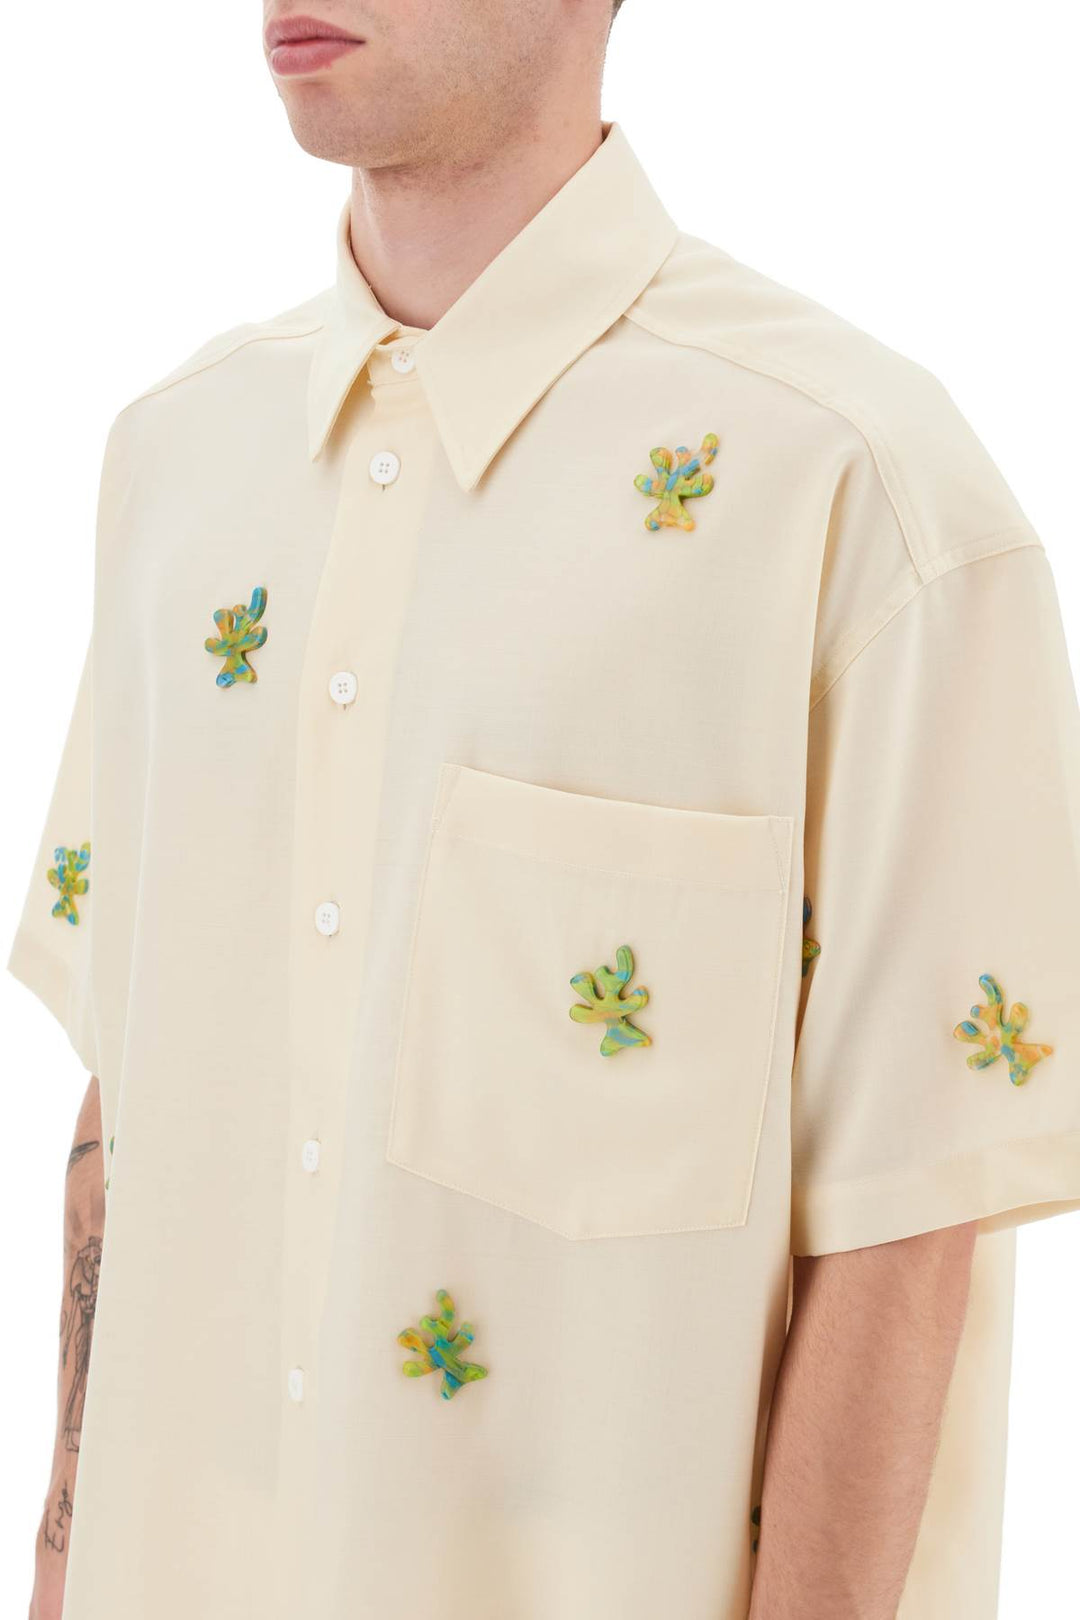 Bonsai 'Alberello' Shirt   Beige